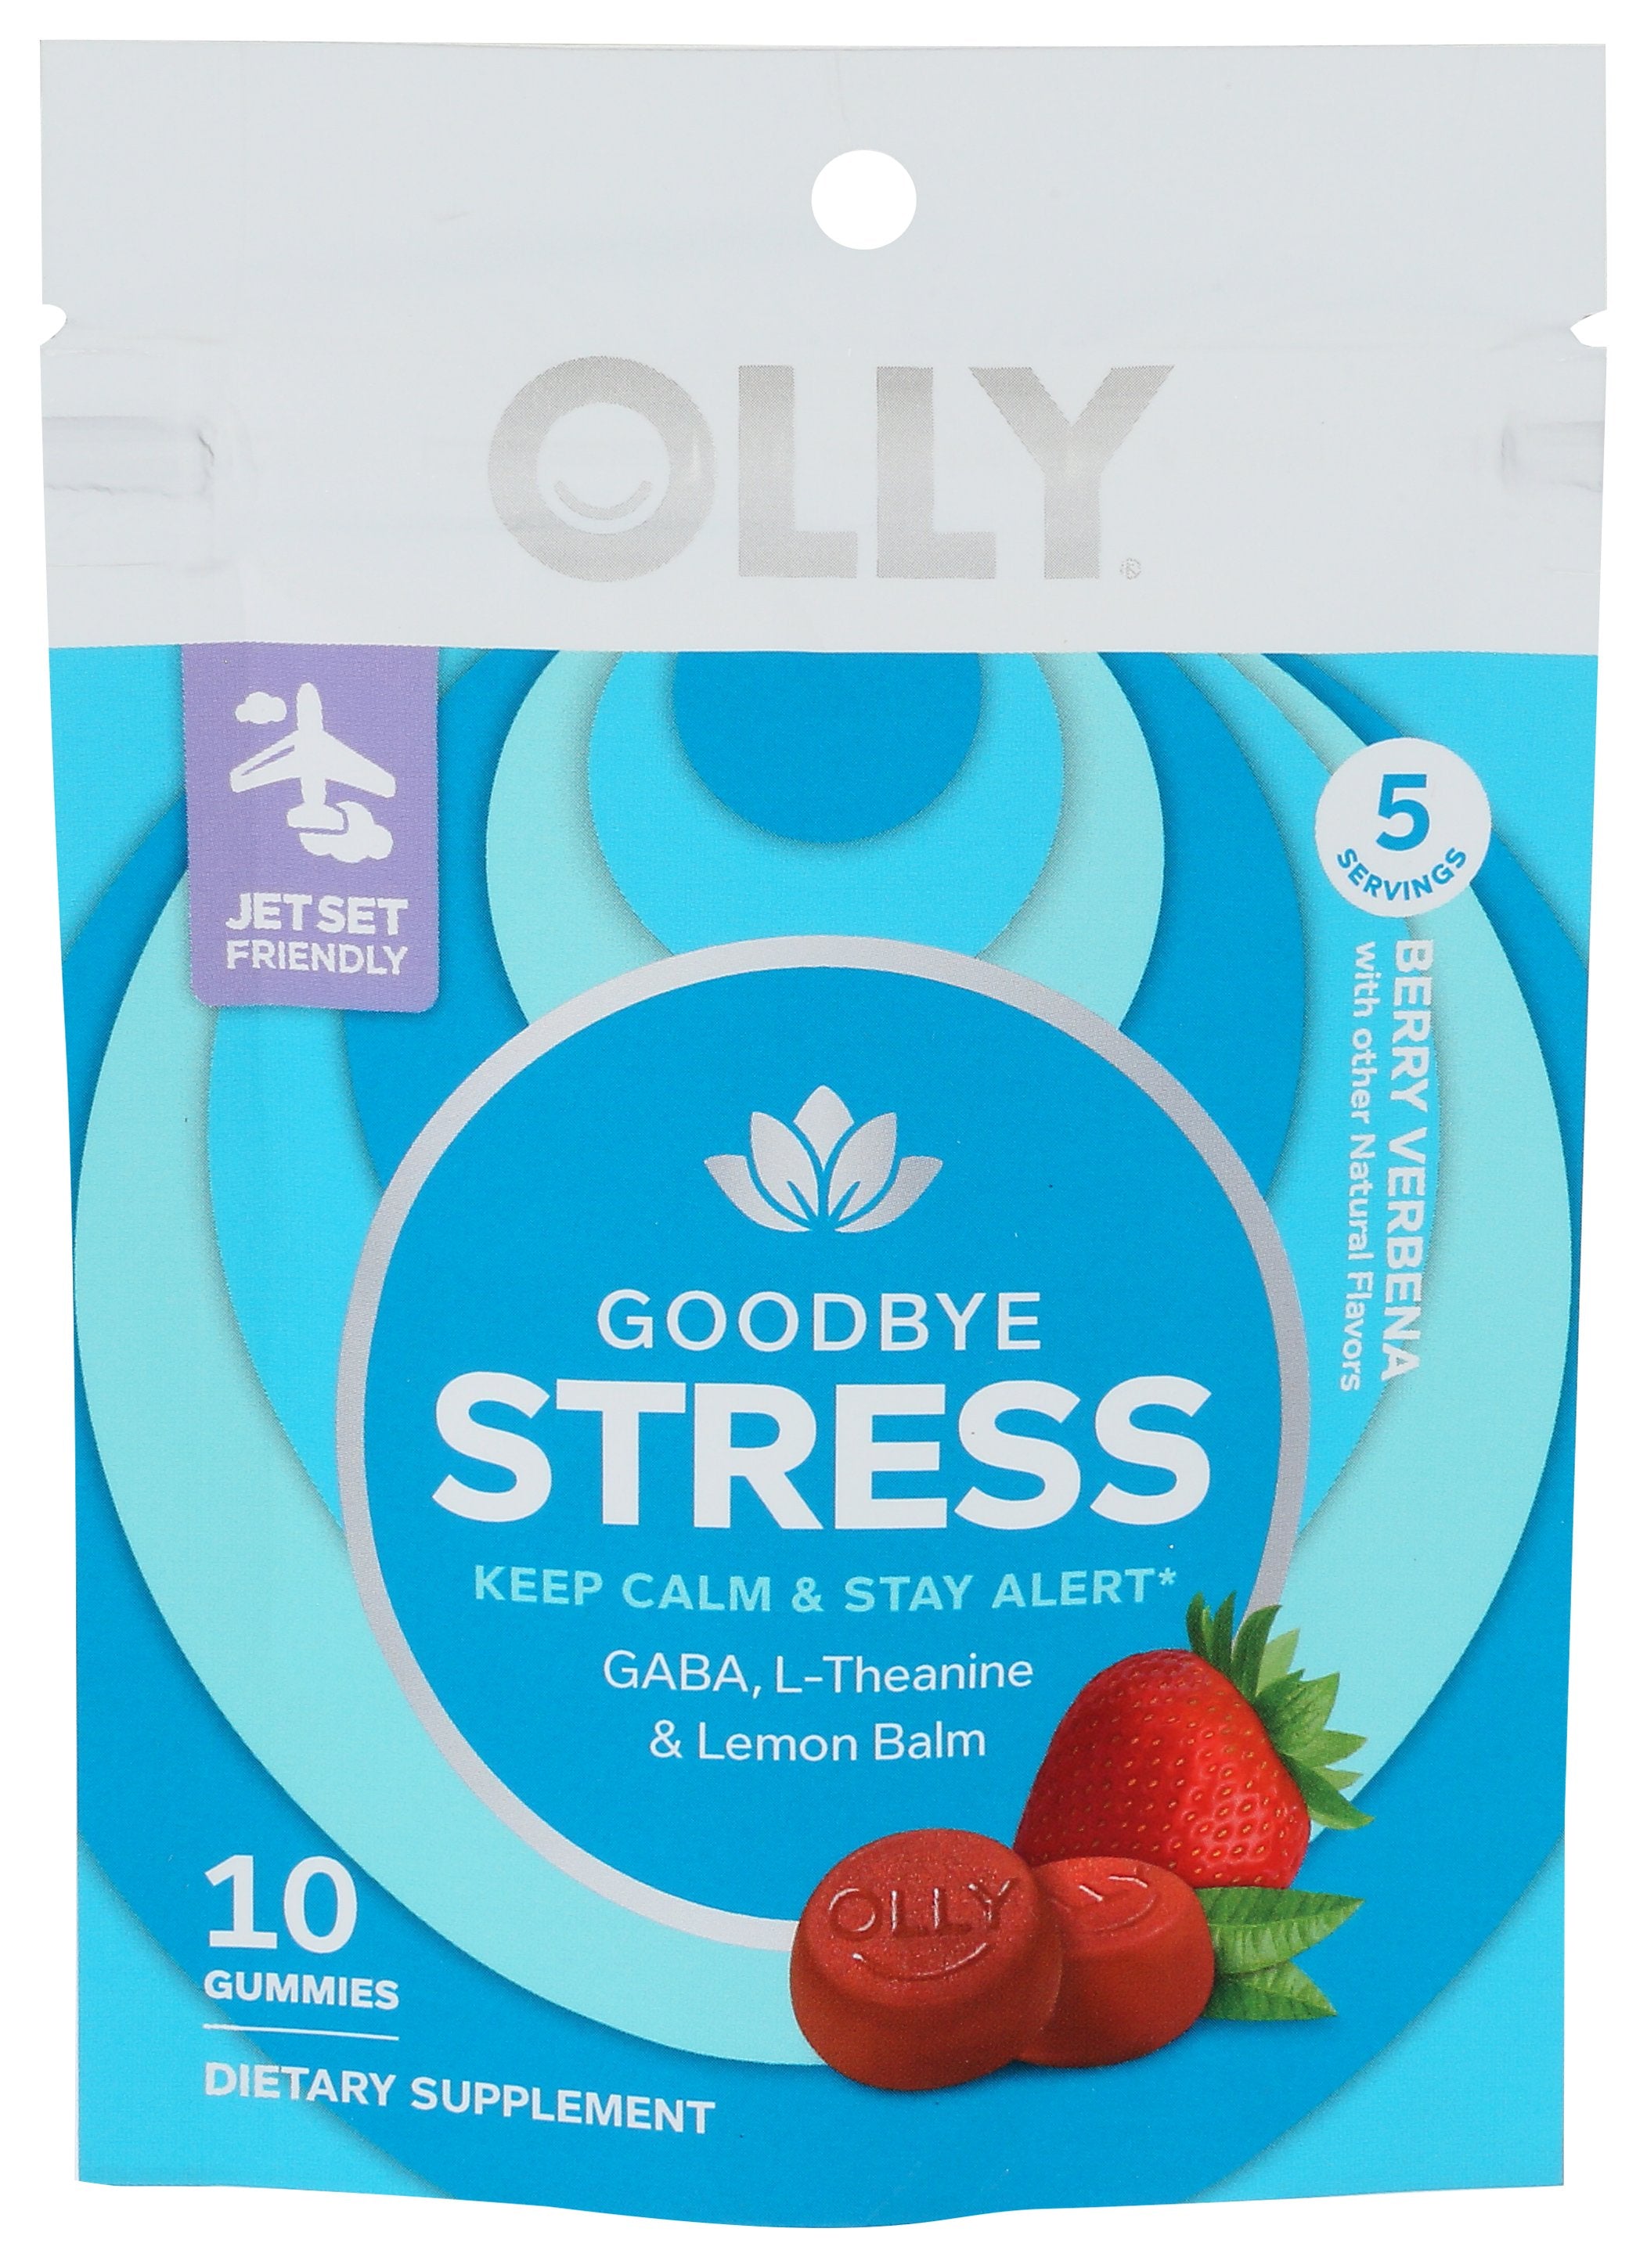 OLLY GOODBYE STRESS TRIAL SZ - Case of 8